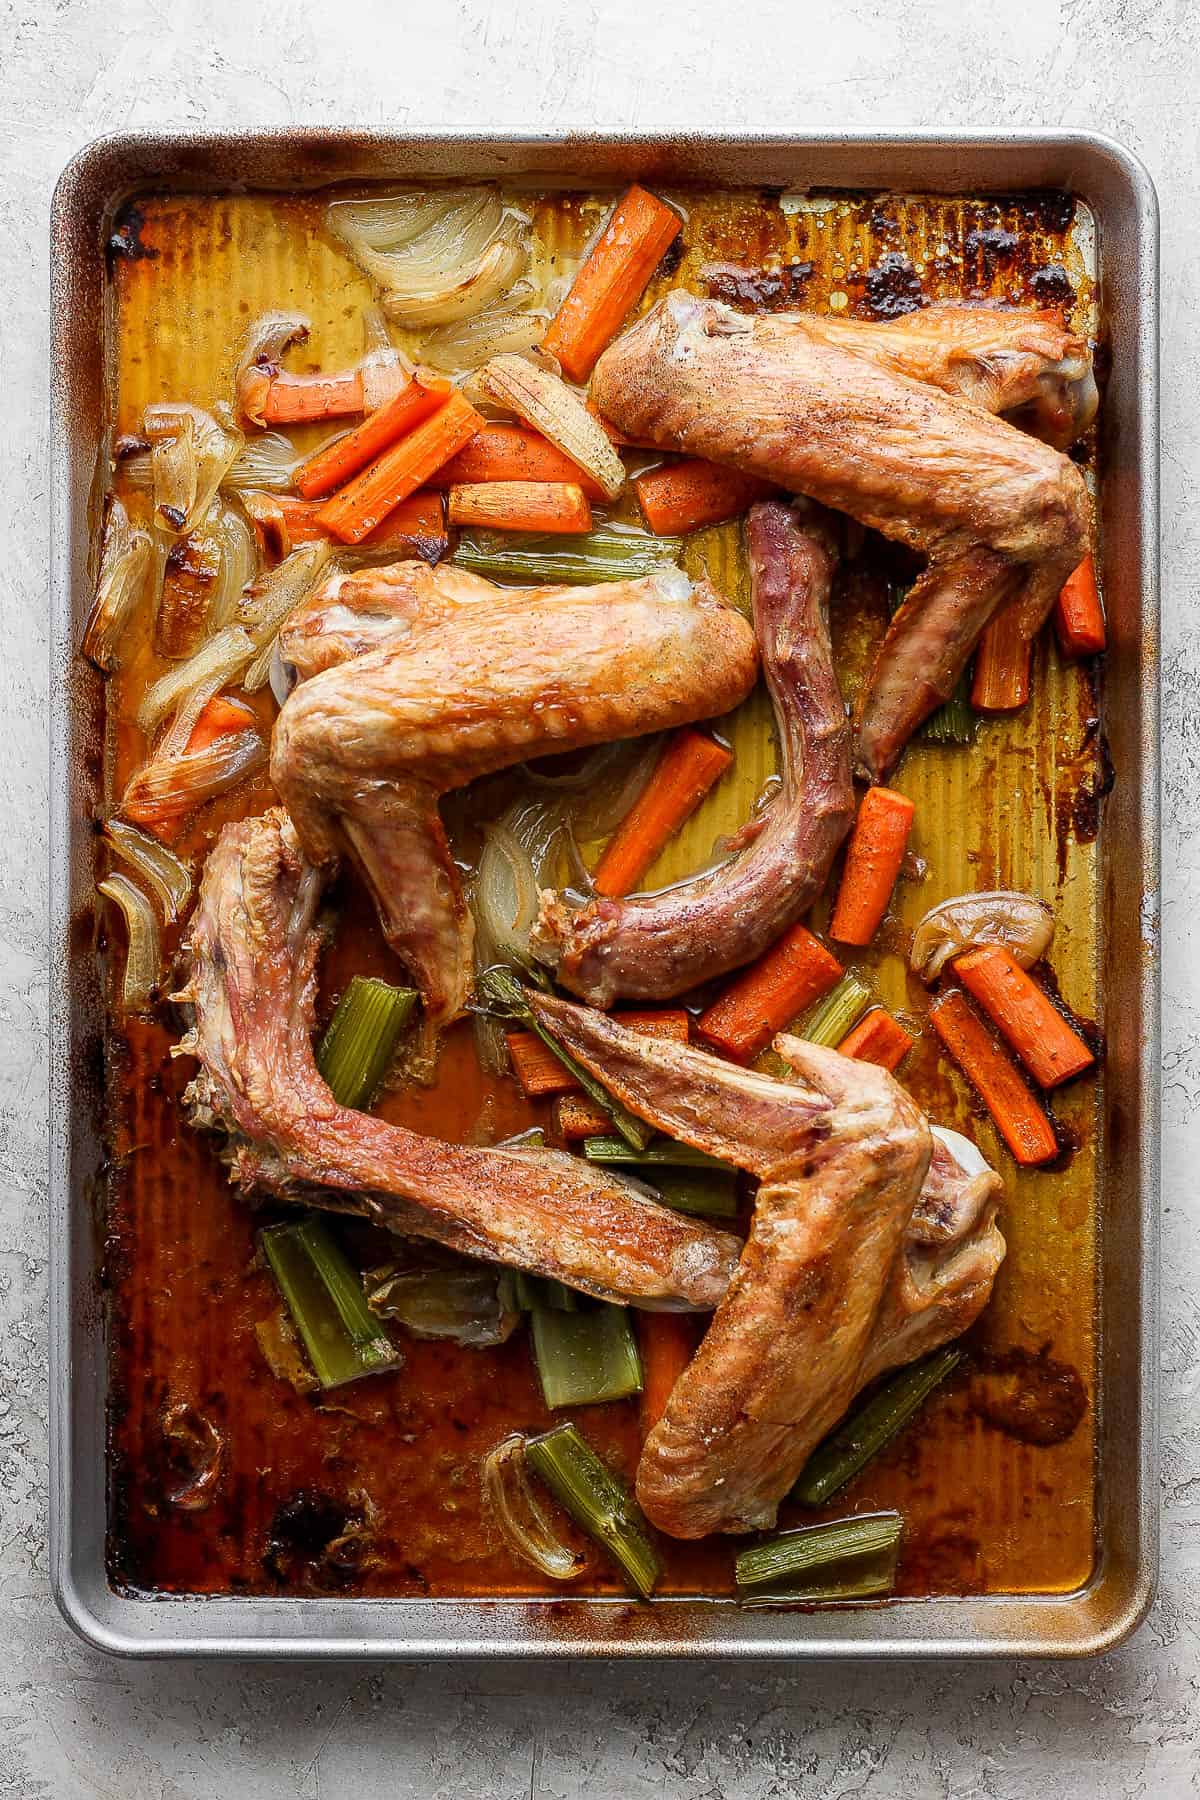 Roasted turkey legs, carrots, celery, and onion on a baking sheet.